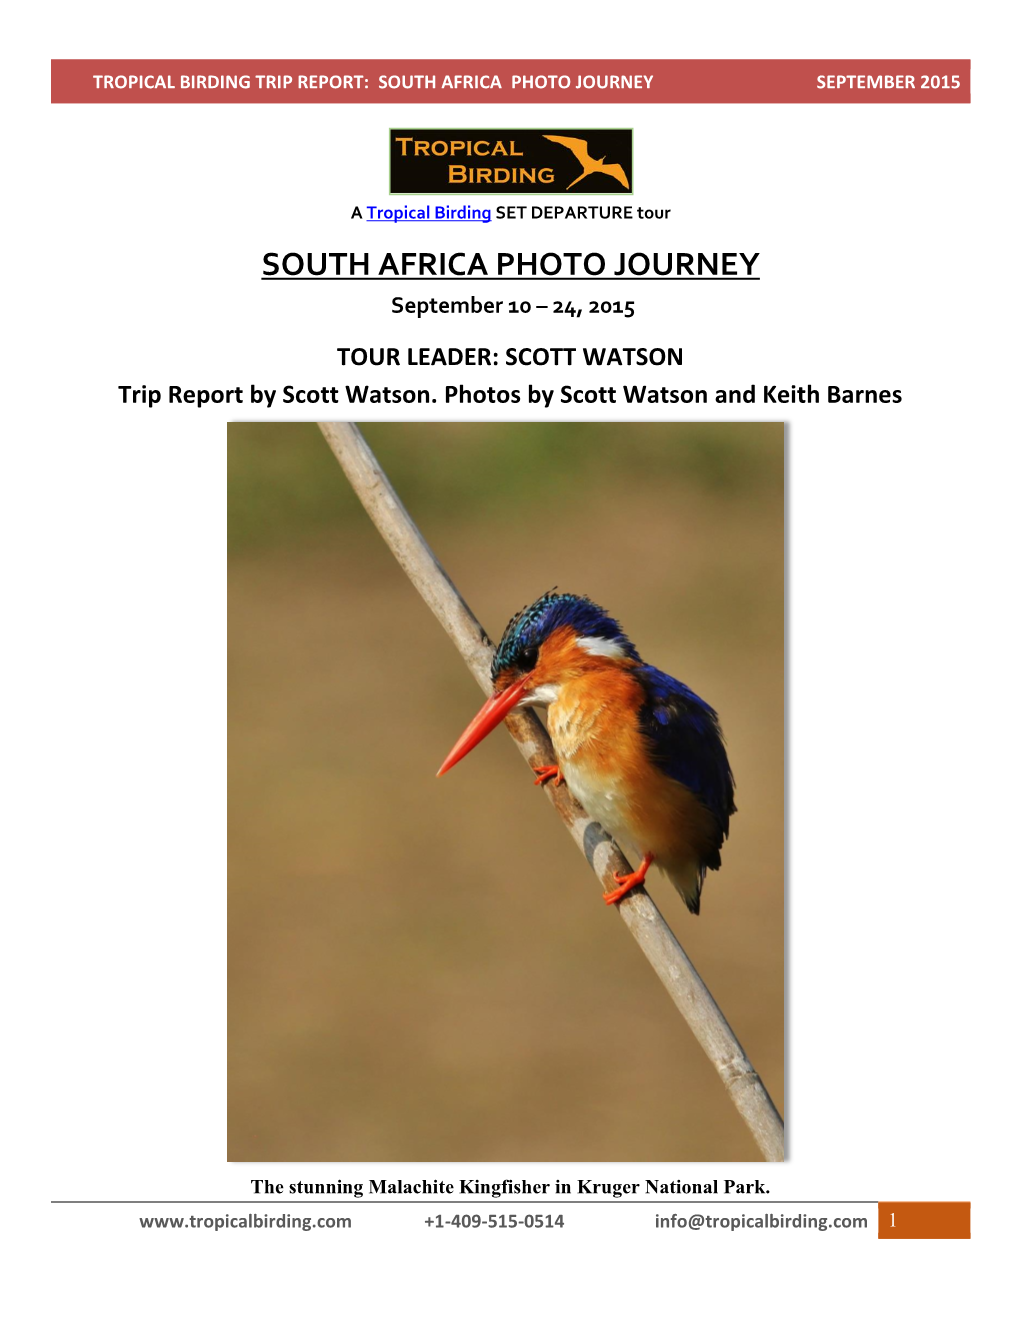 South Africa Photo Journey September 2015